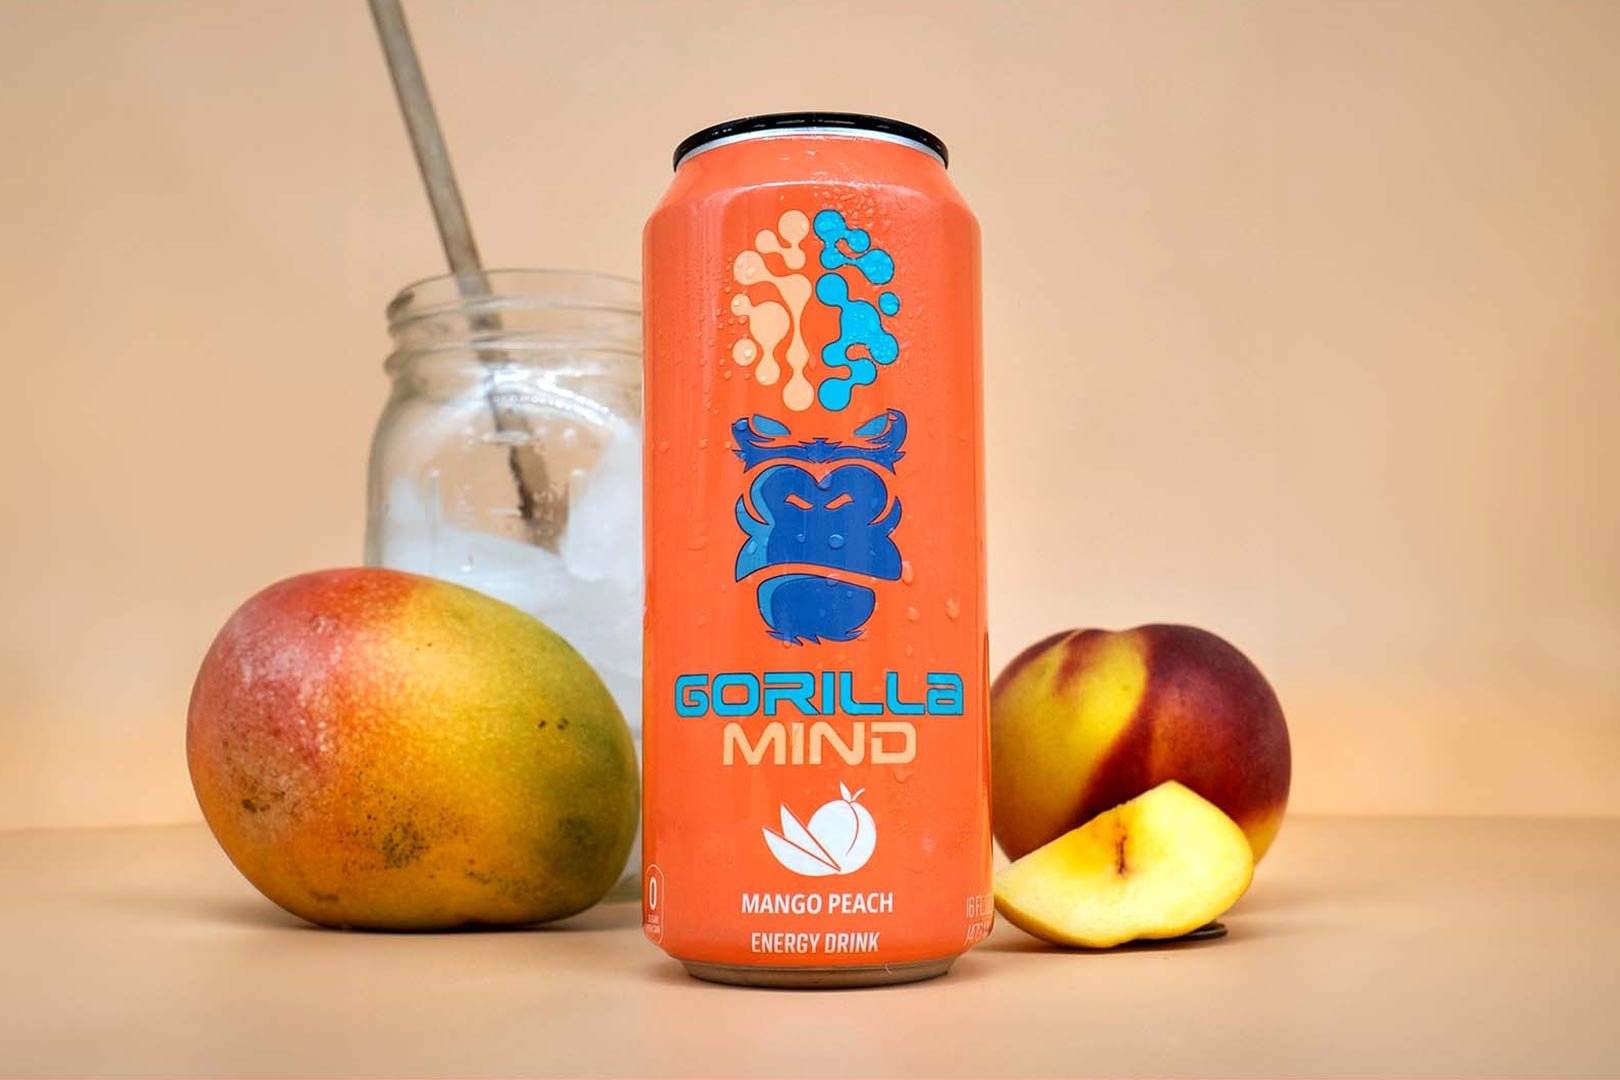 Where To Buy Mango Peach Gorilla Mind Energy Drink